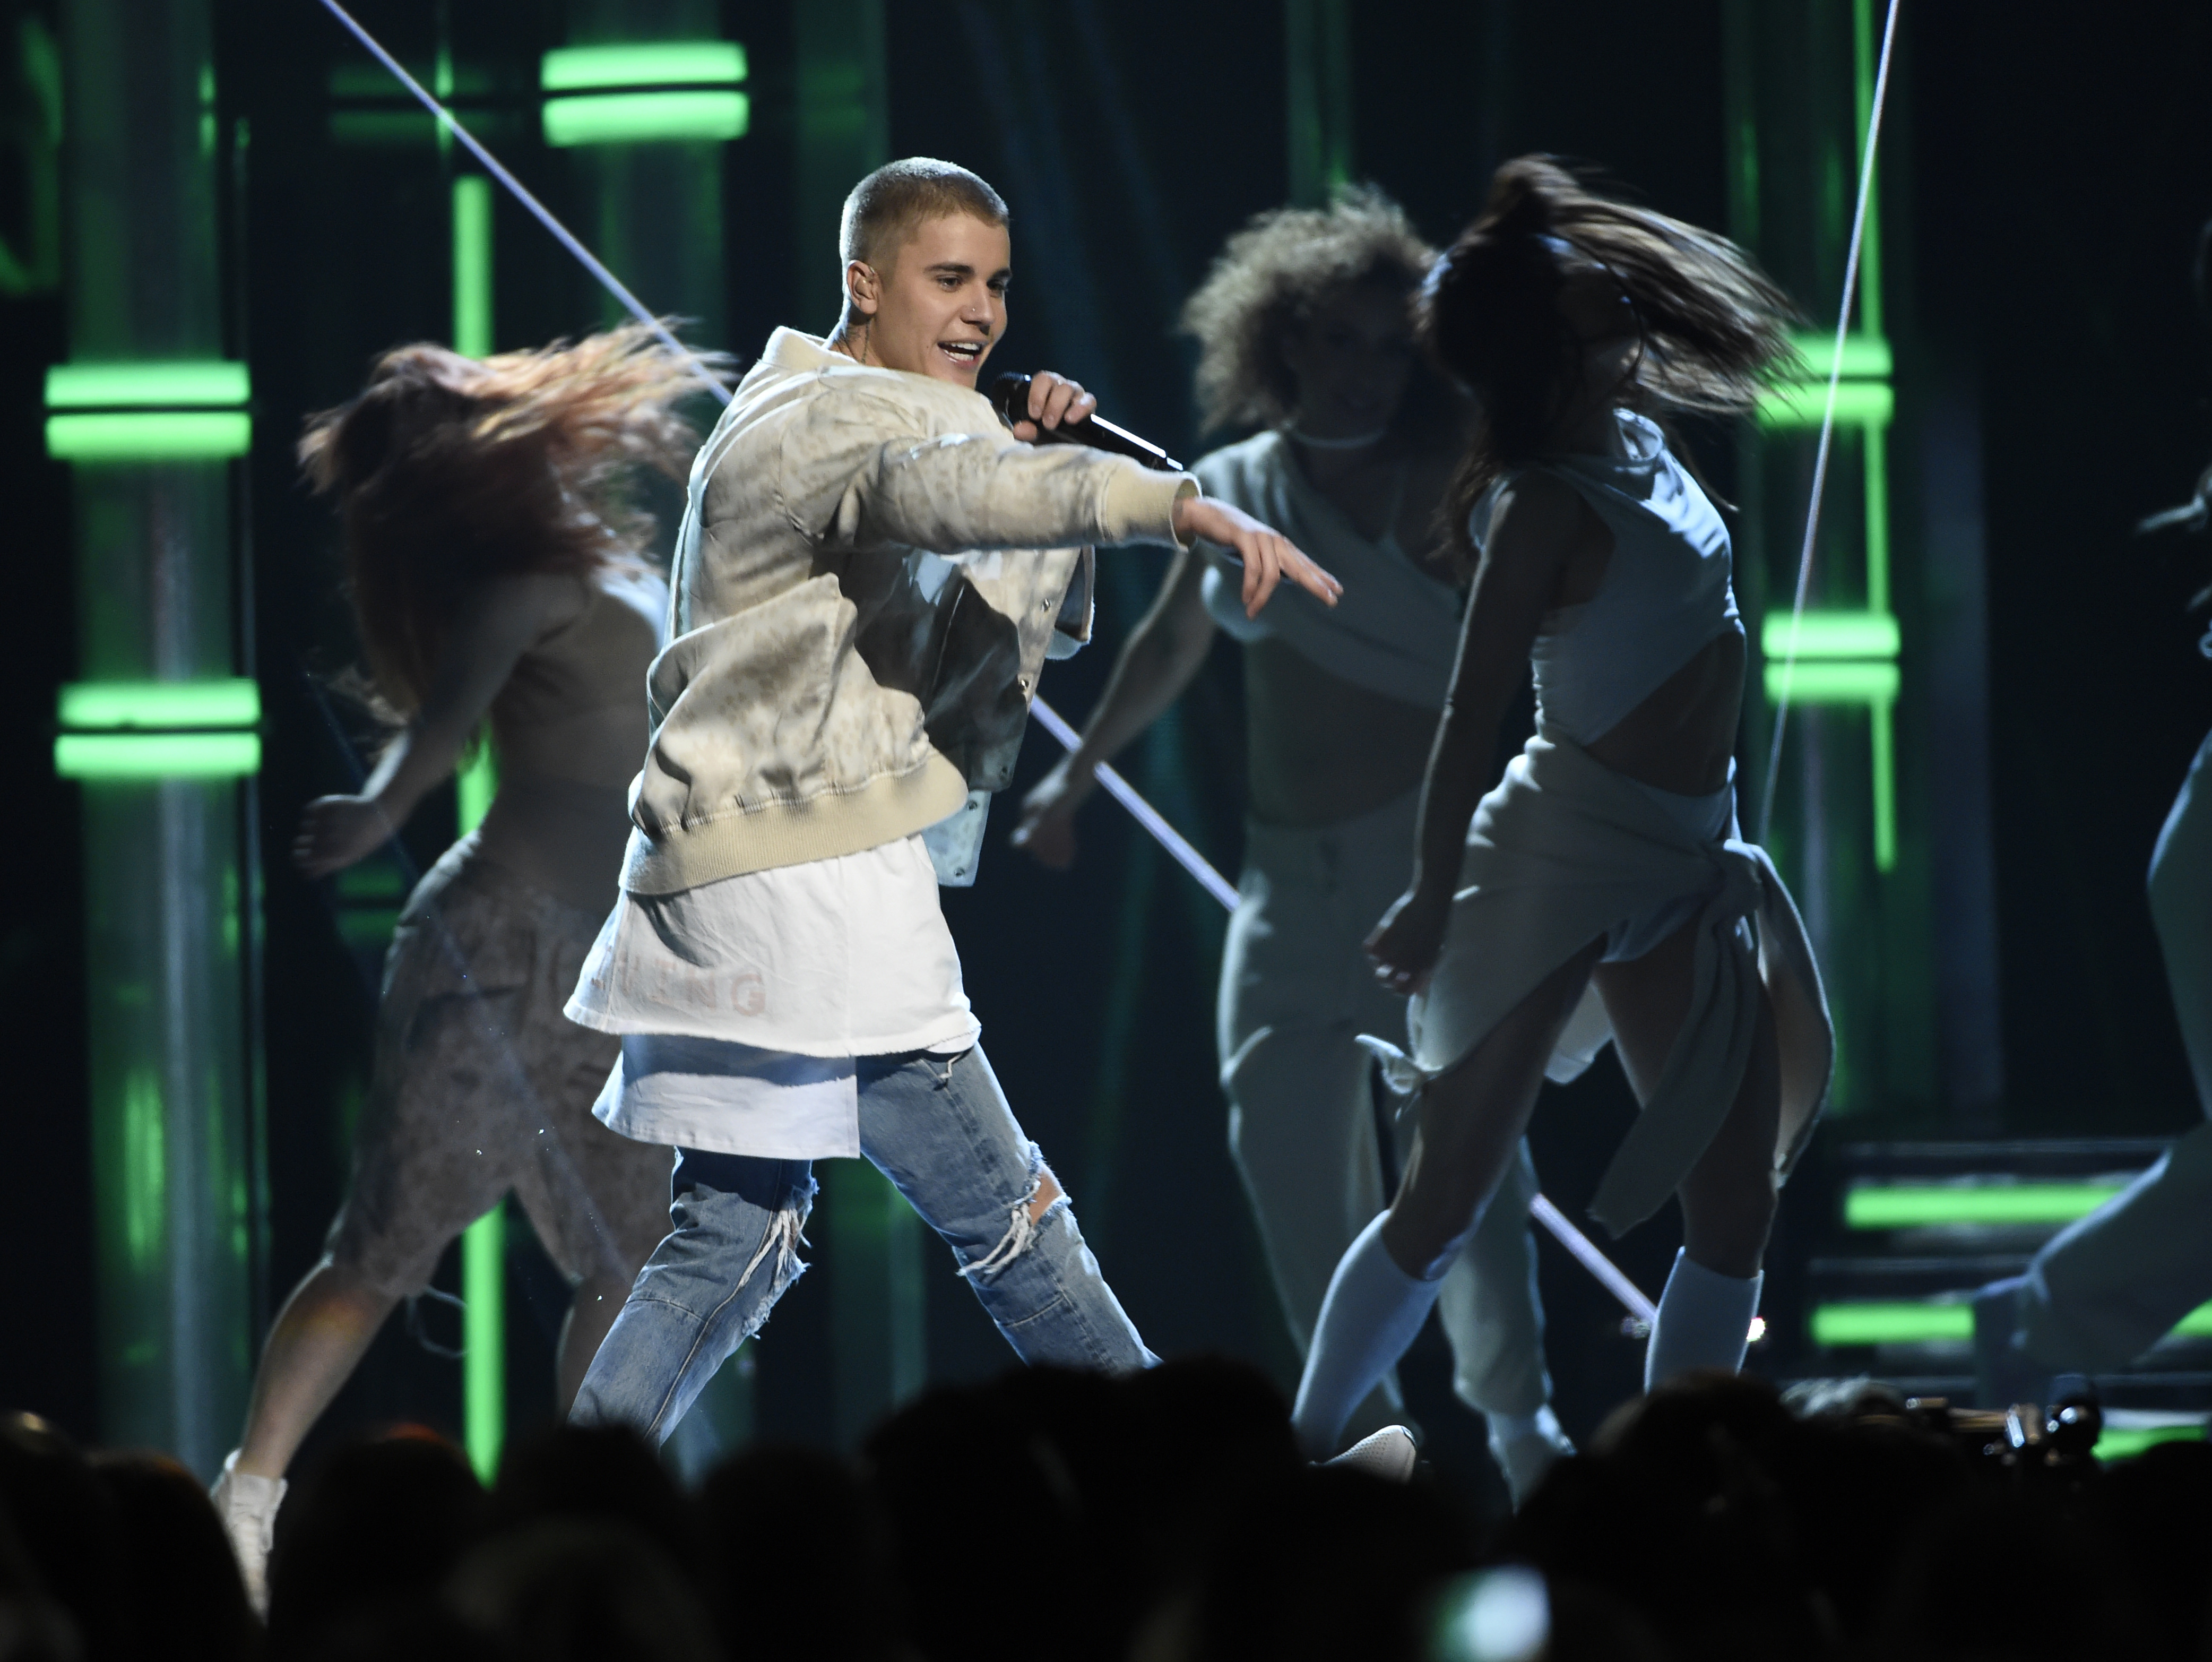 Justin Bieber at the Billboard Music Awards